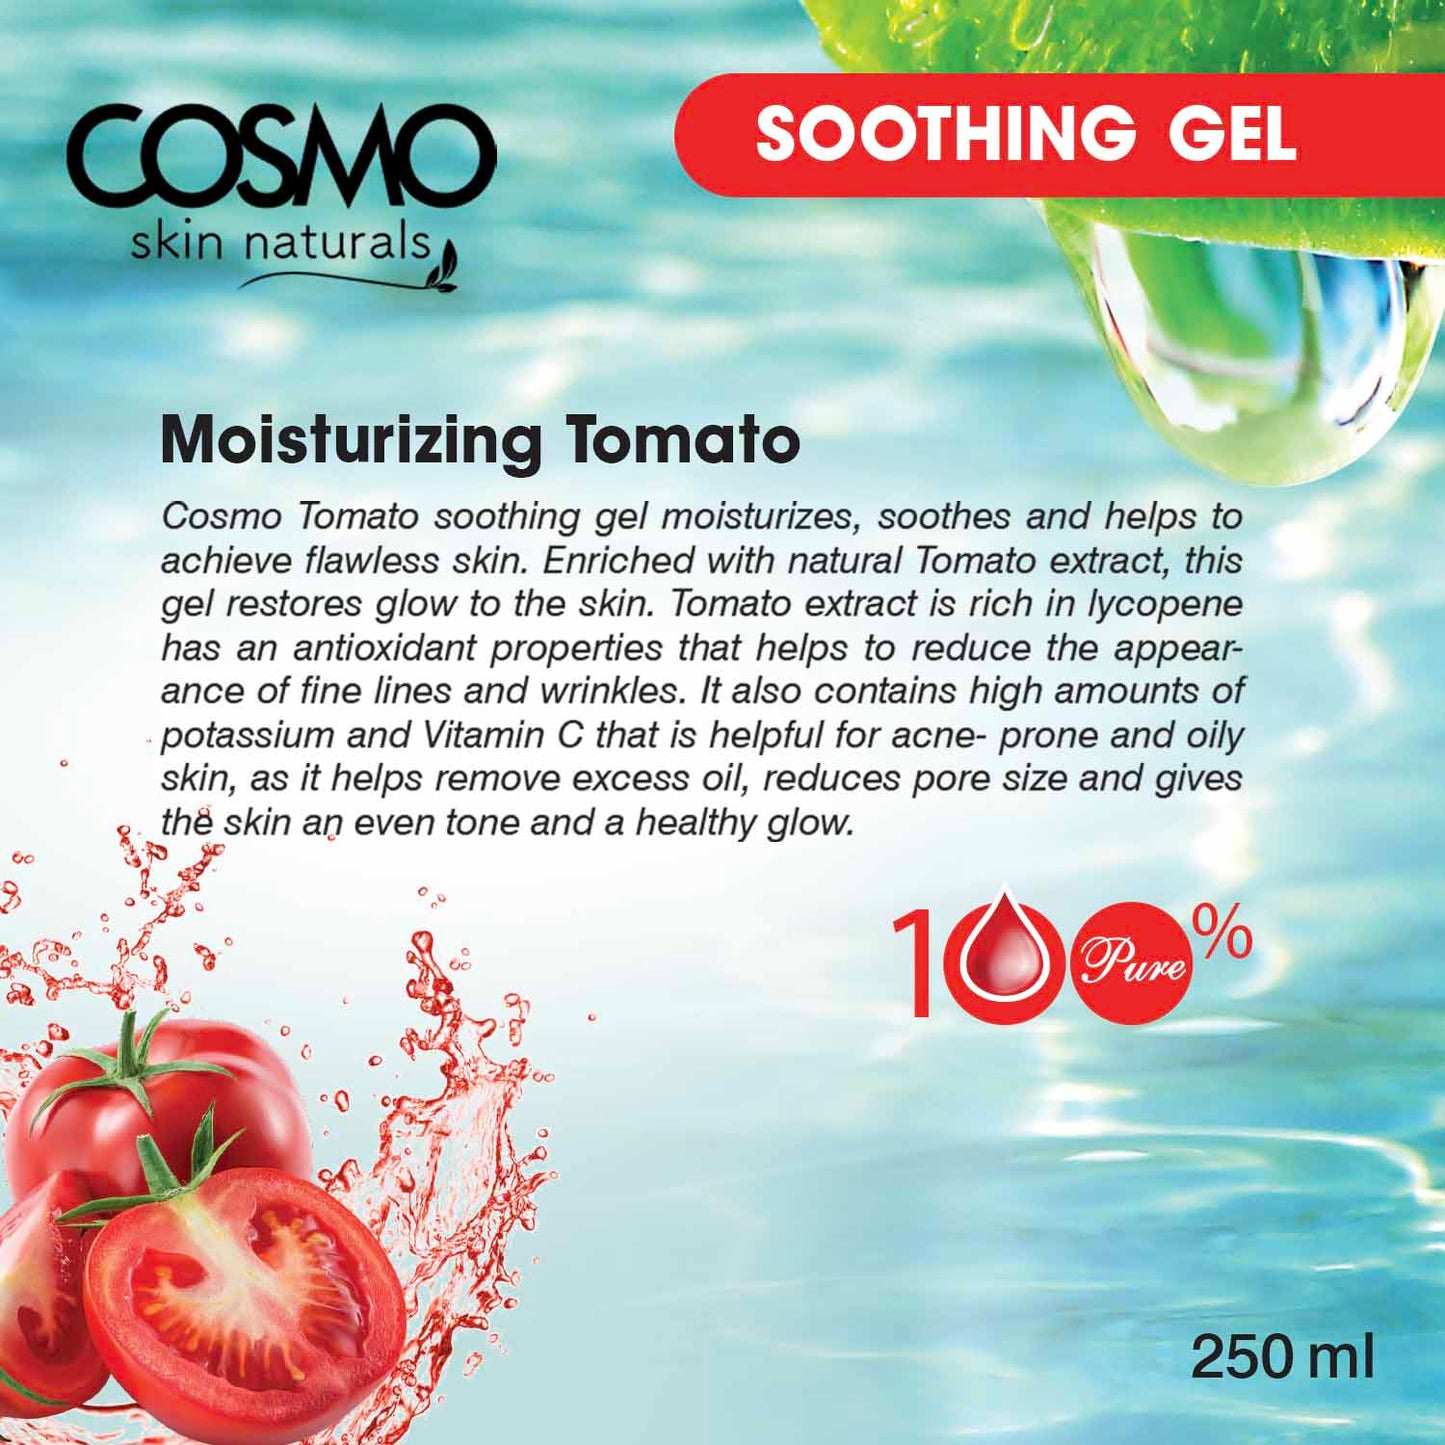 MOISTURIZING TOMATO 100% PURE - SOOTHING GEL